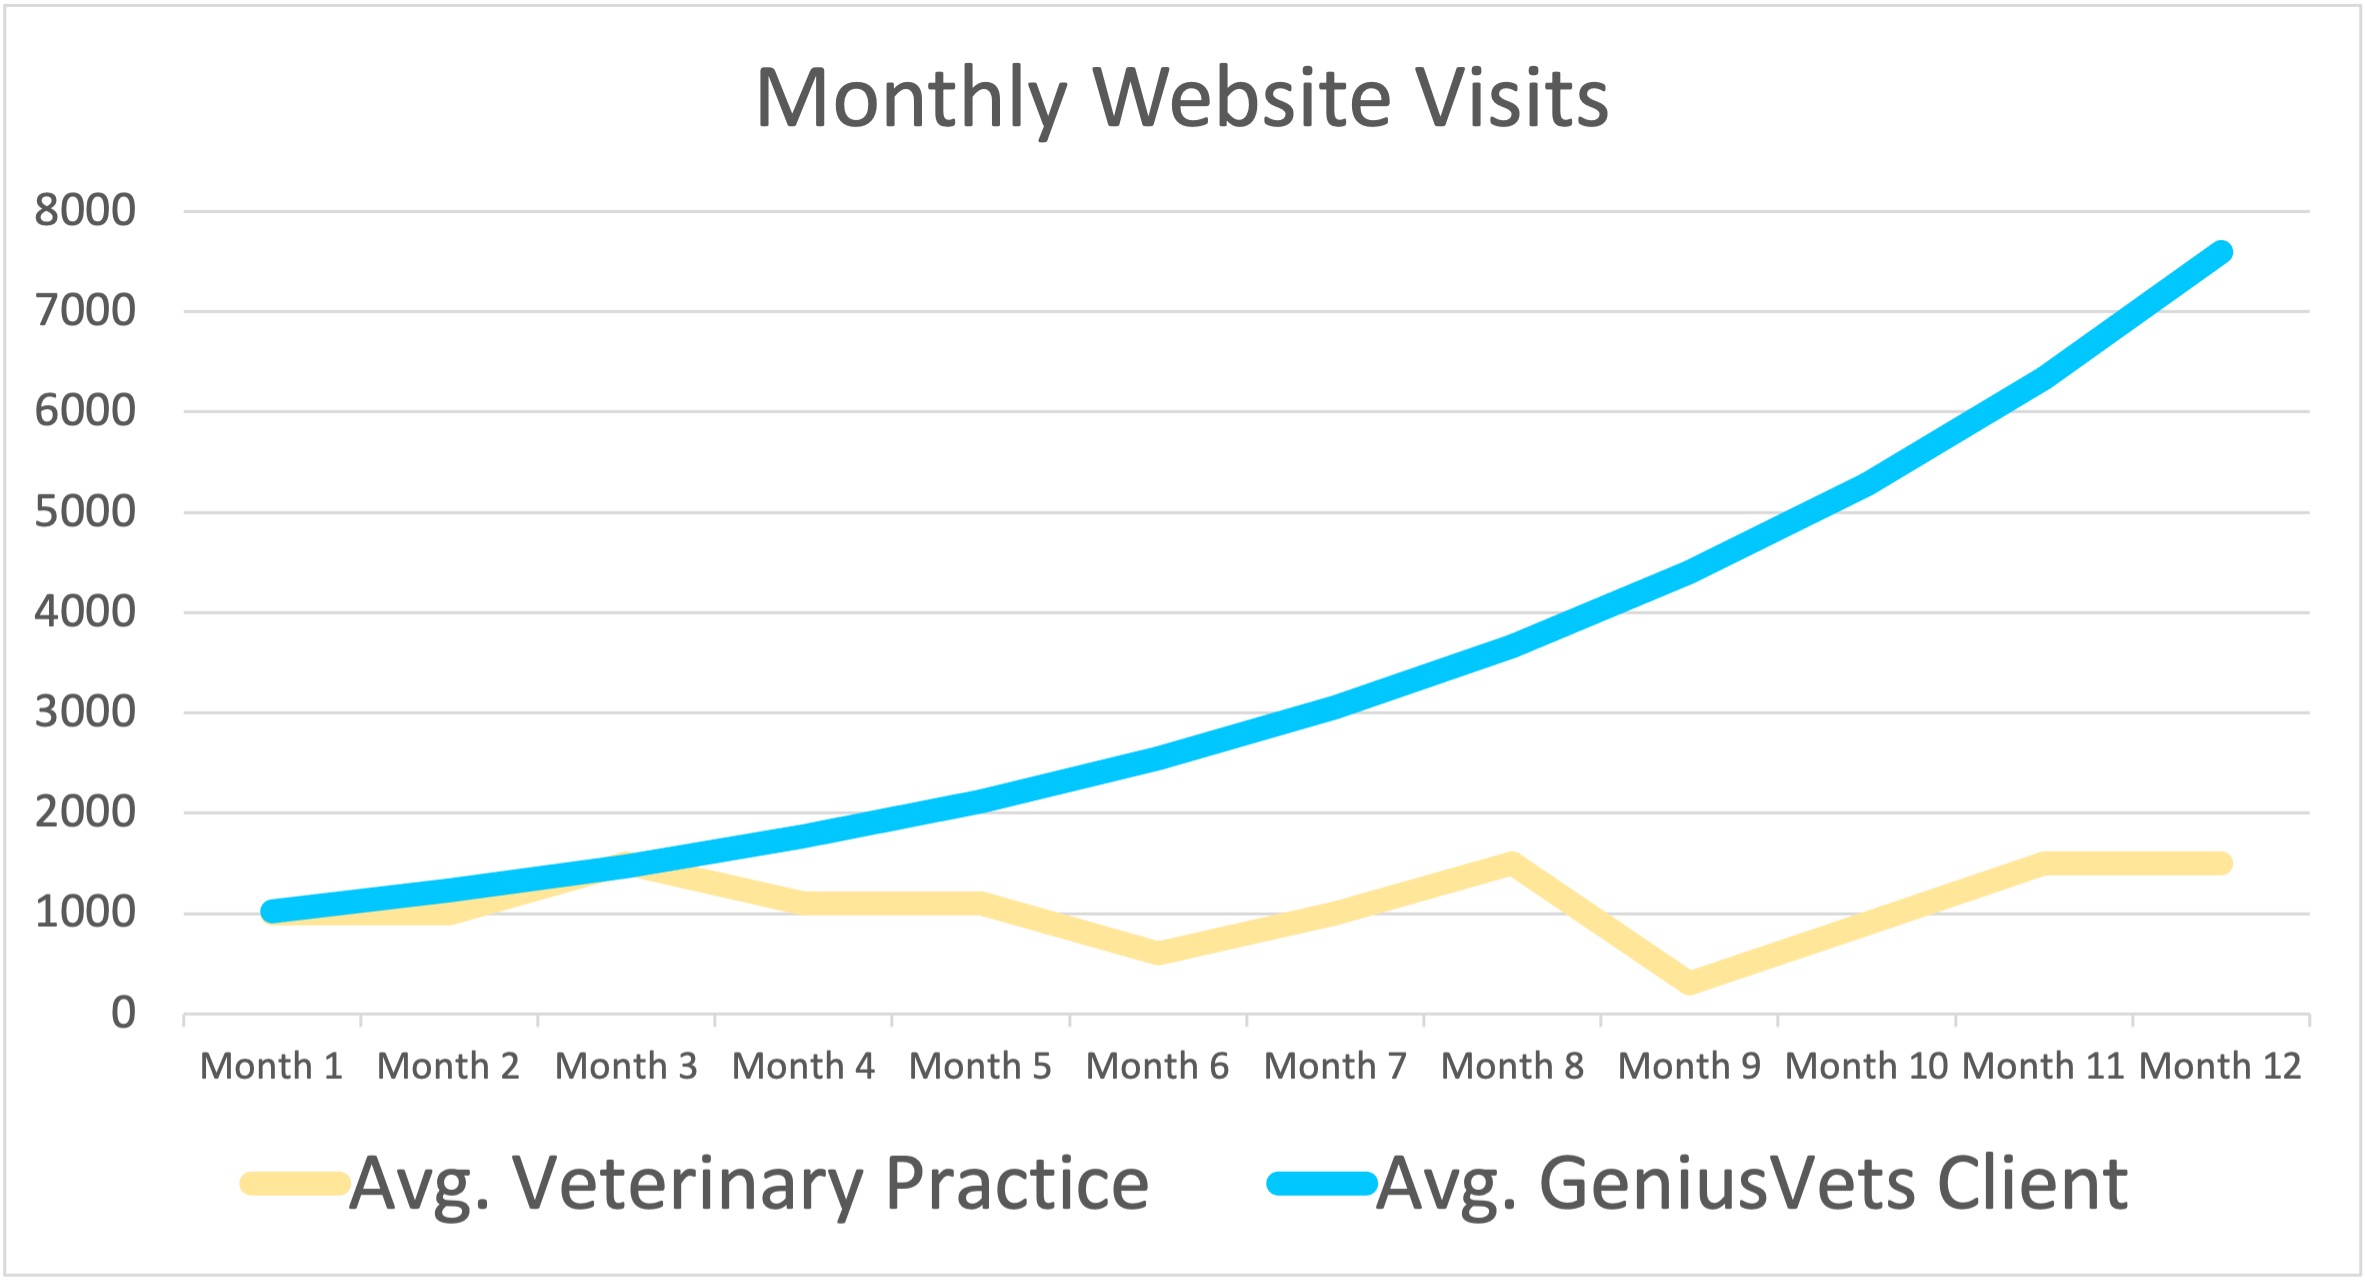 geniusvets website traffic results is the best in the veterinary industry